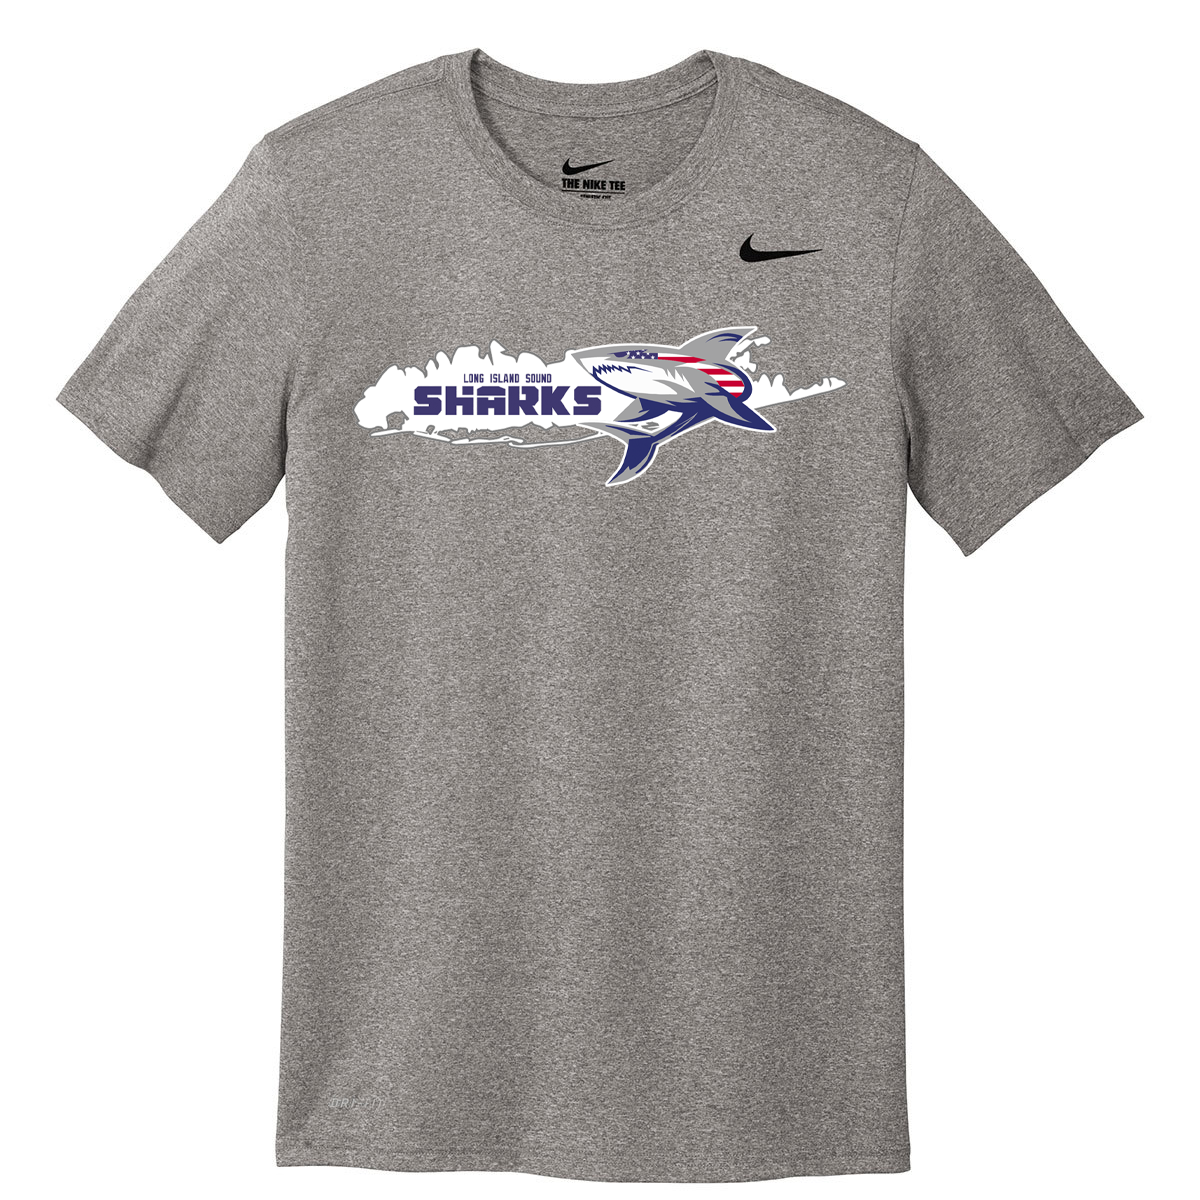 Long Island Sound Sharks Football Nike rLegend Tee